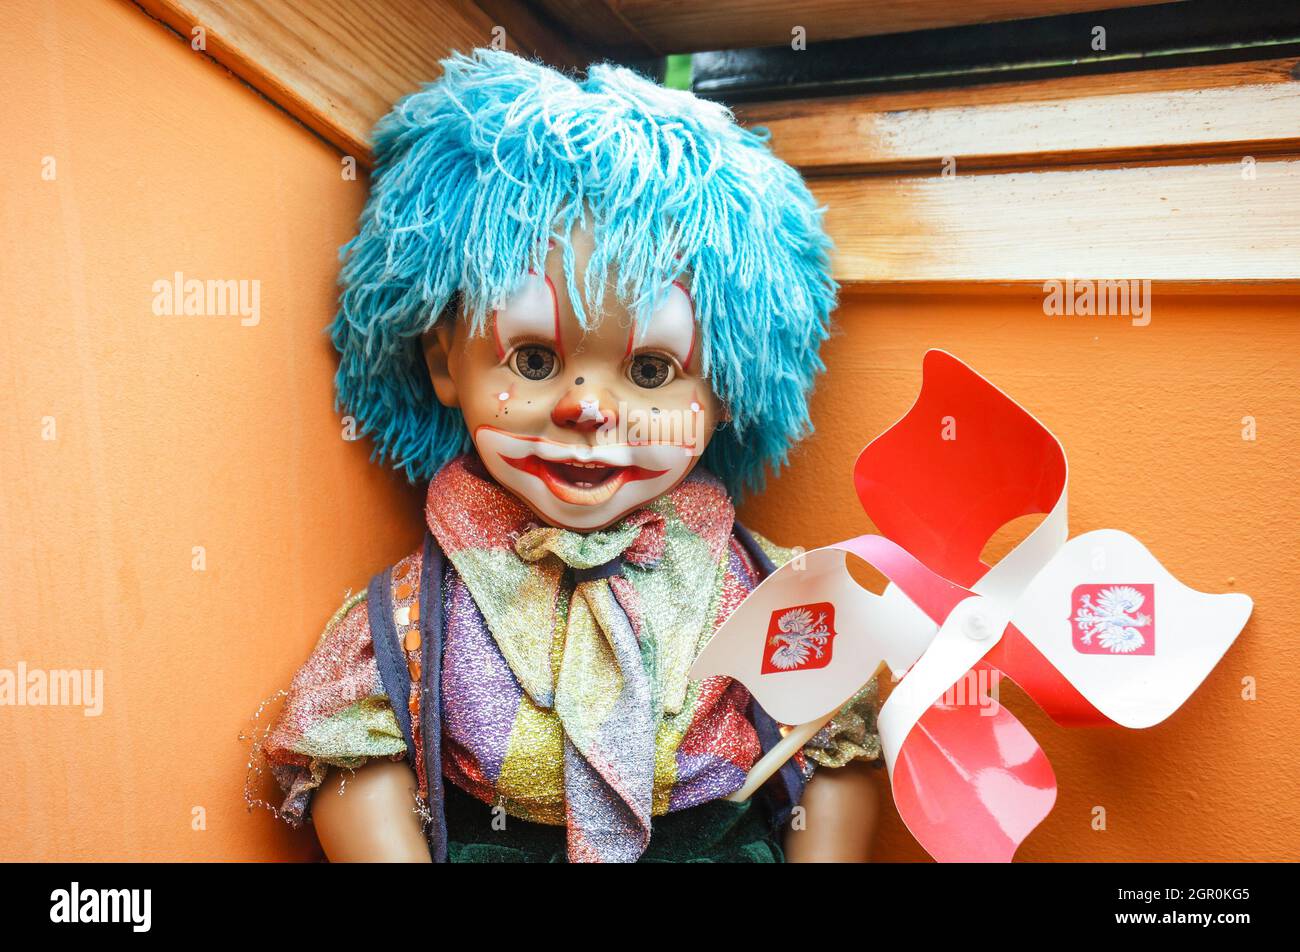 POZNAN, POLAND - Jun 11, 2016: A sitting clown doll holding a Polish fan article. Stock Photo